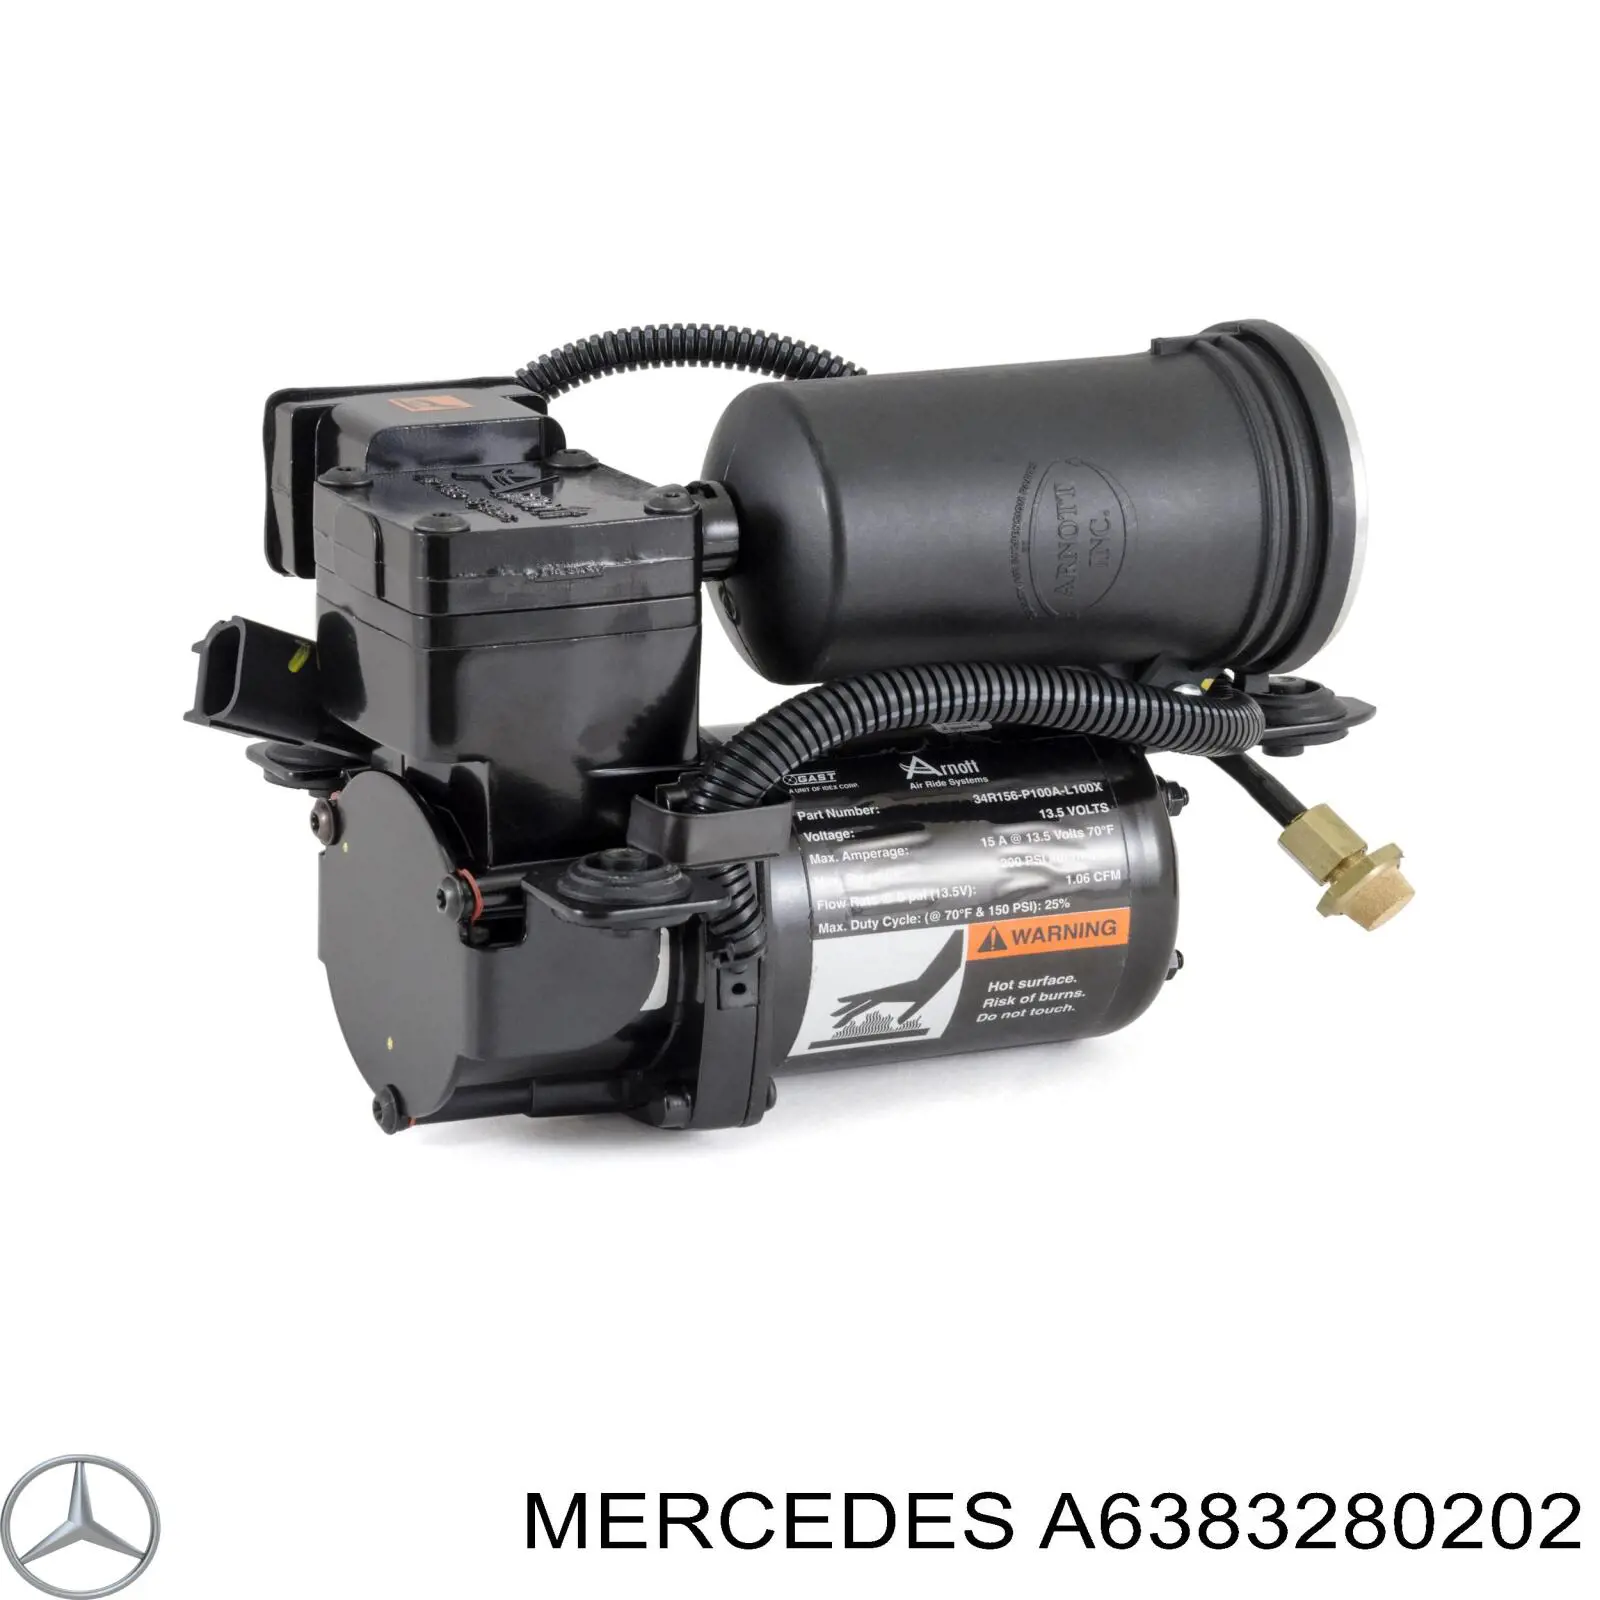 A6383280202 Mercedes компрессор пневмоподкачки (амортизаторов)